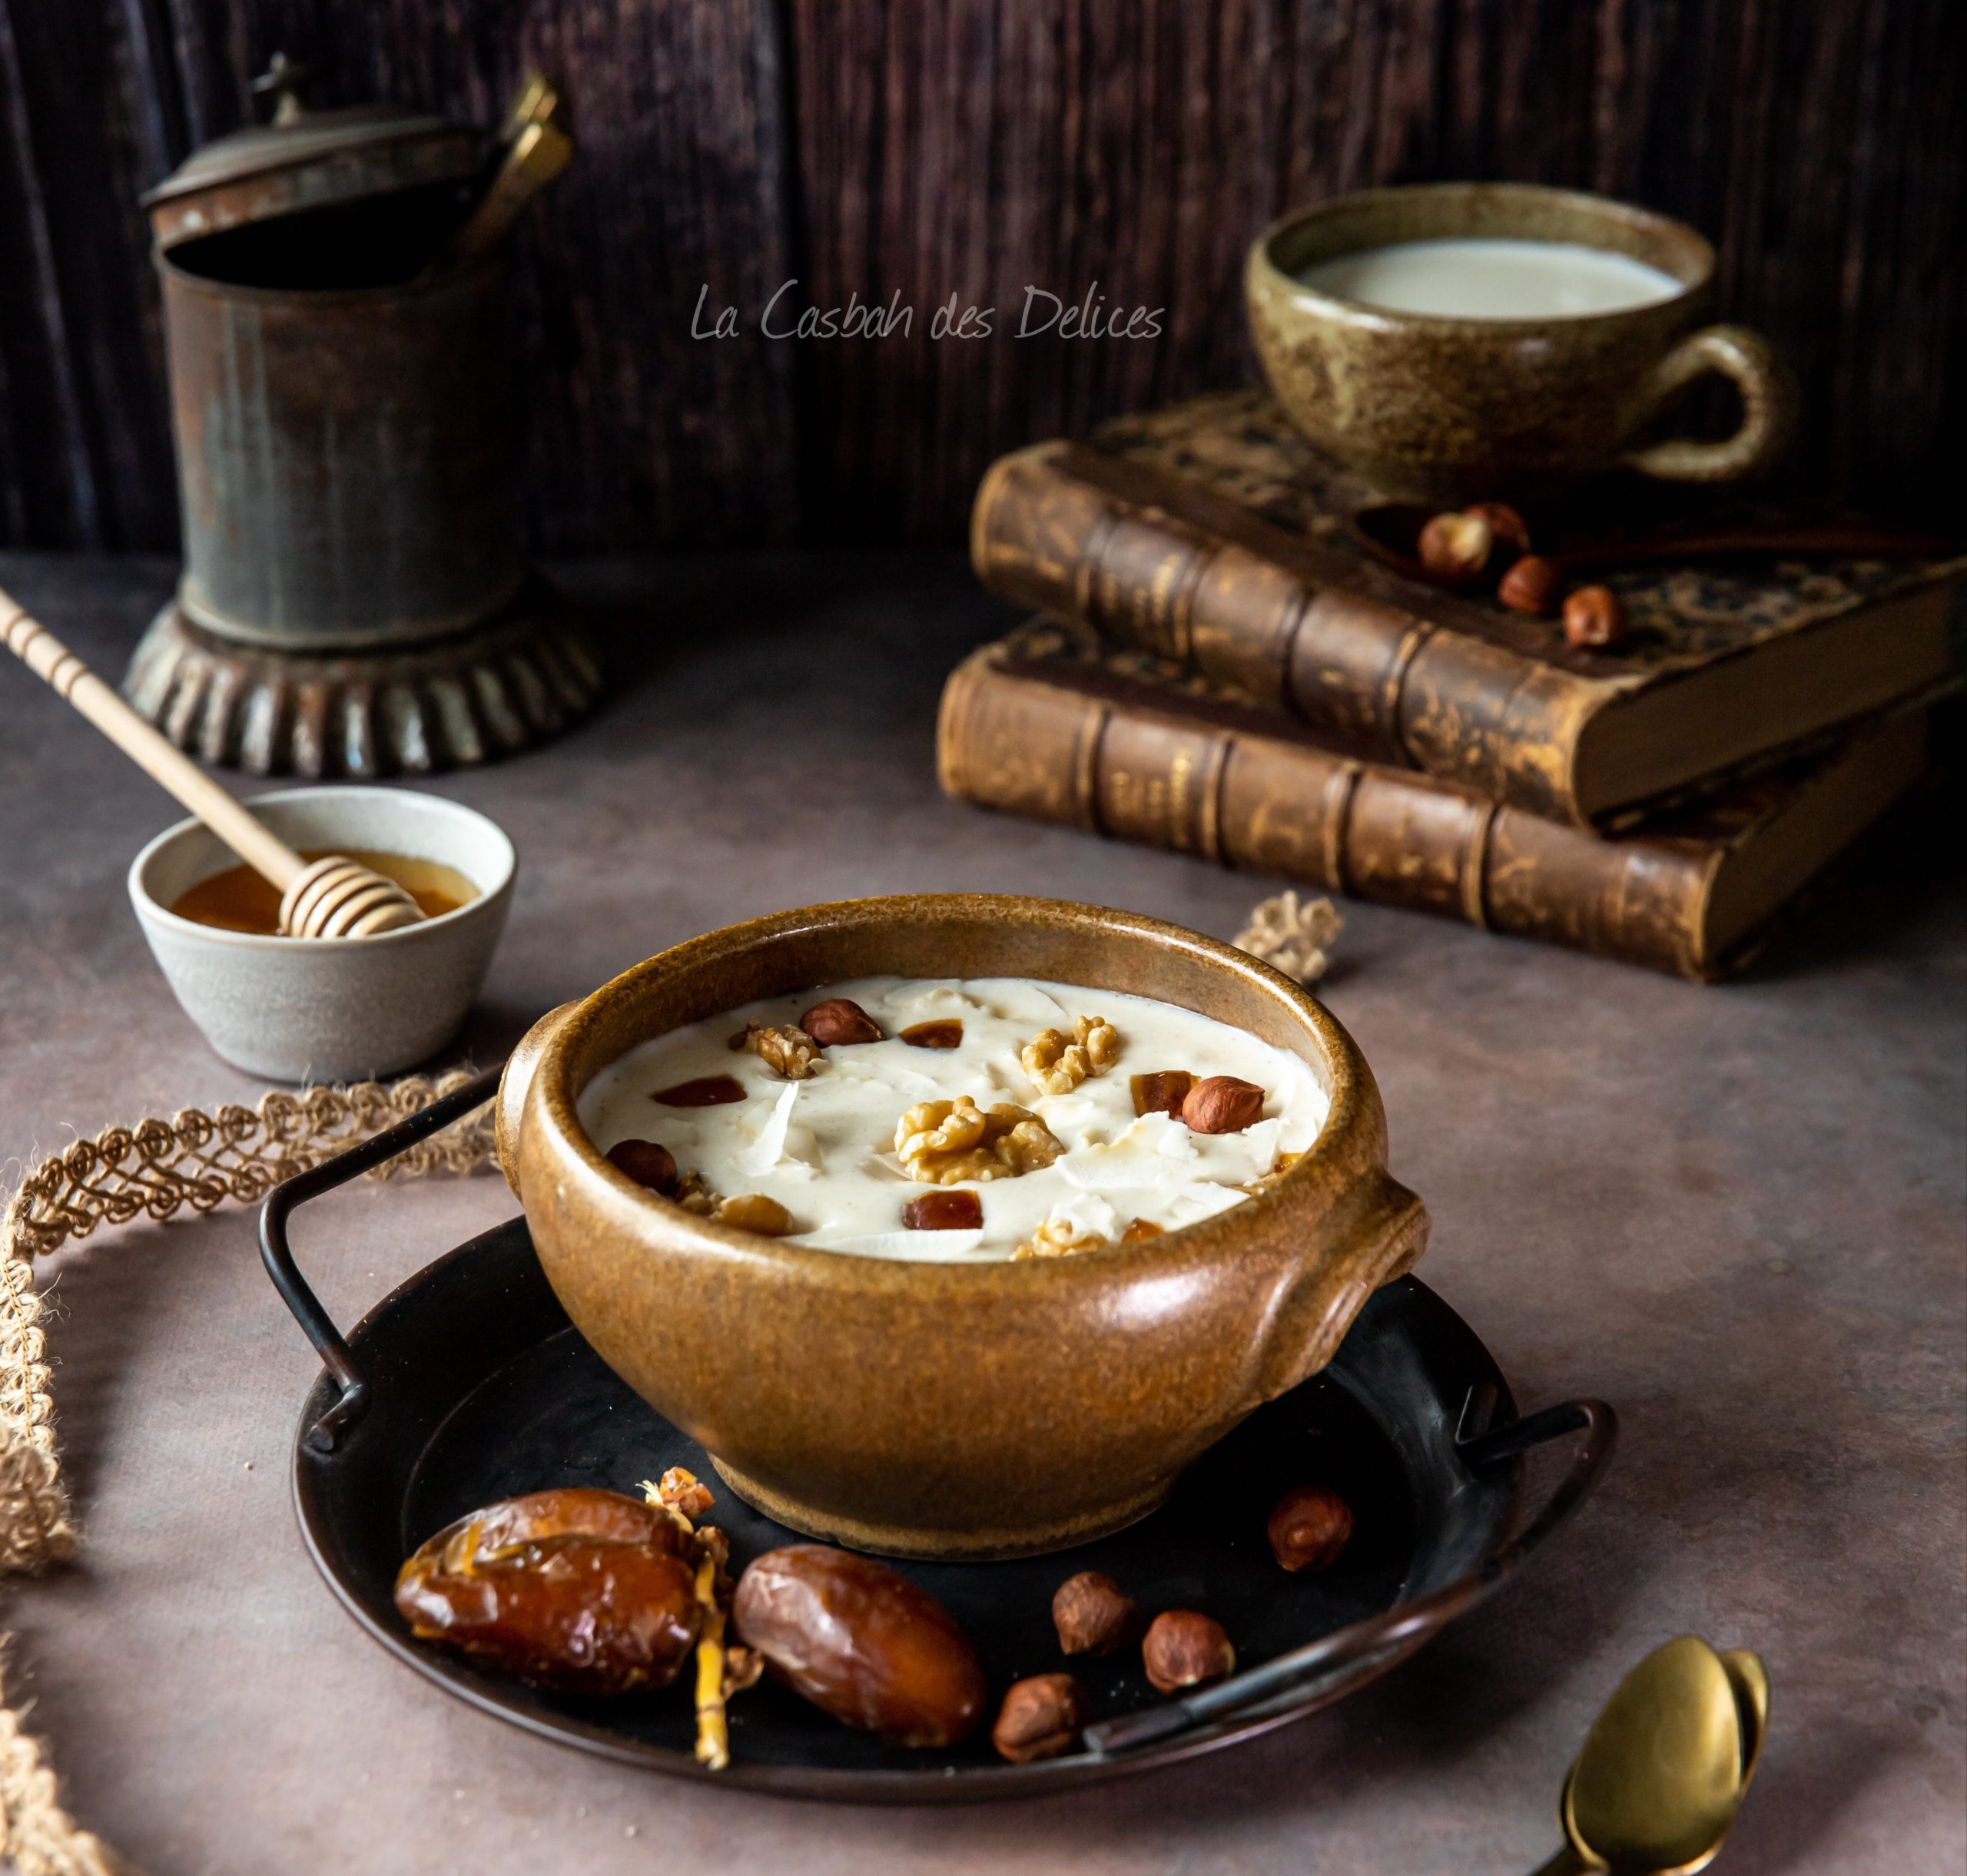 Talbina : Porridge à la farine d'orge - La Casbah des Delices